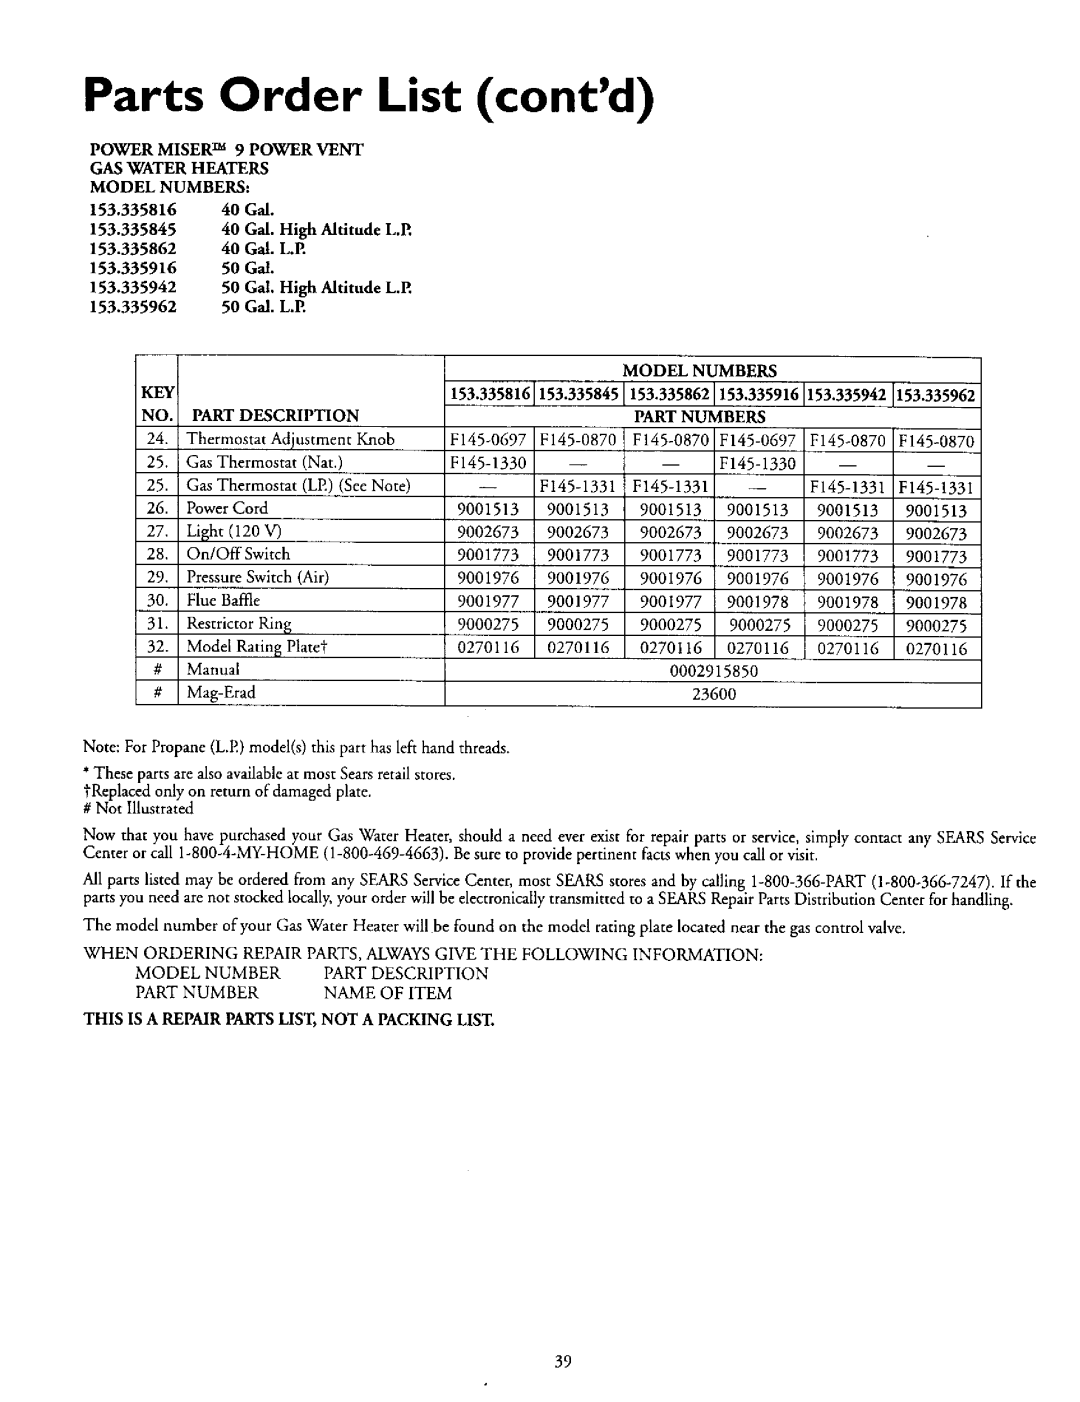 Kenmore 153.335962 Parts Order List contd, POWER MISER TM 9 POWER VENT GAS WATER HEATERS, Model Numbers, #Manual, 9001513 